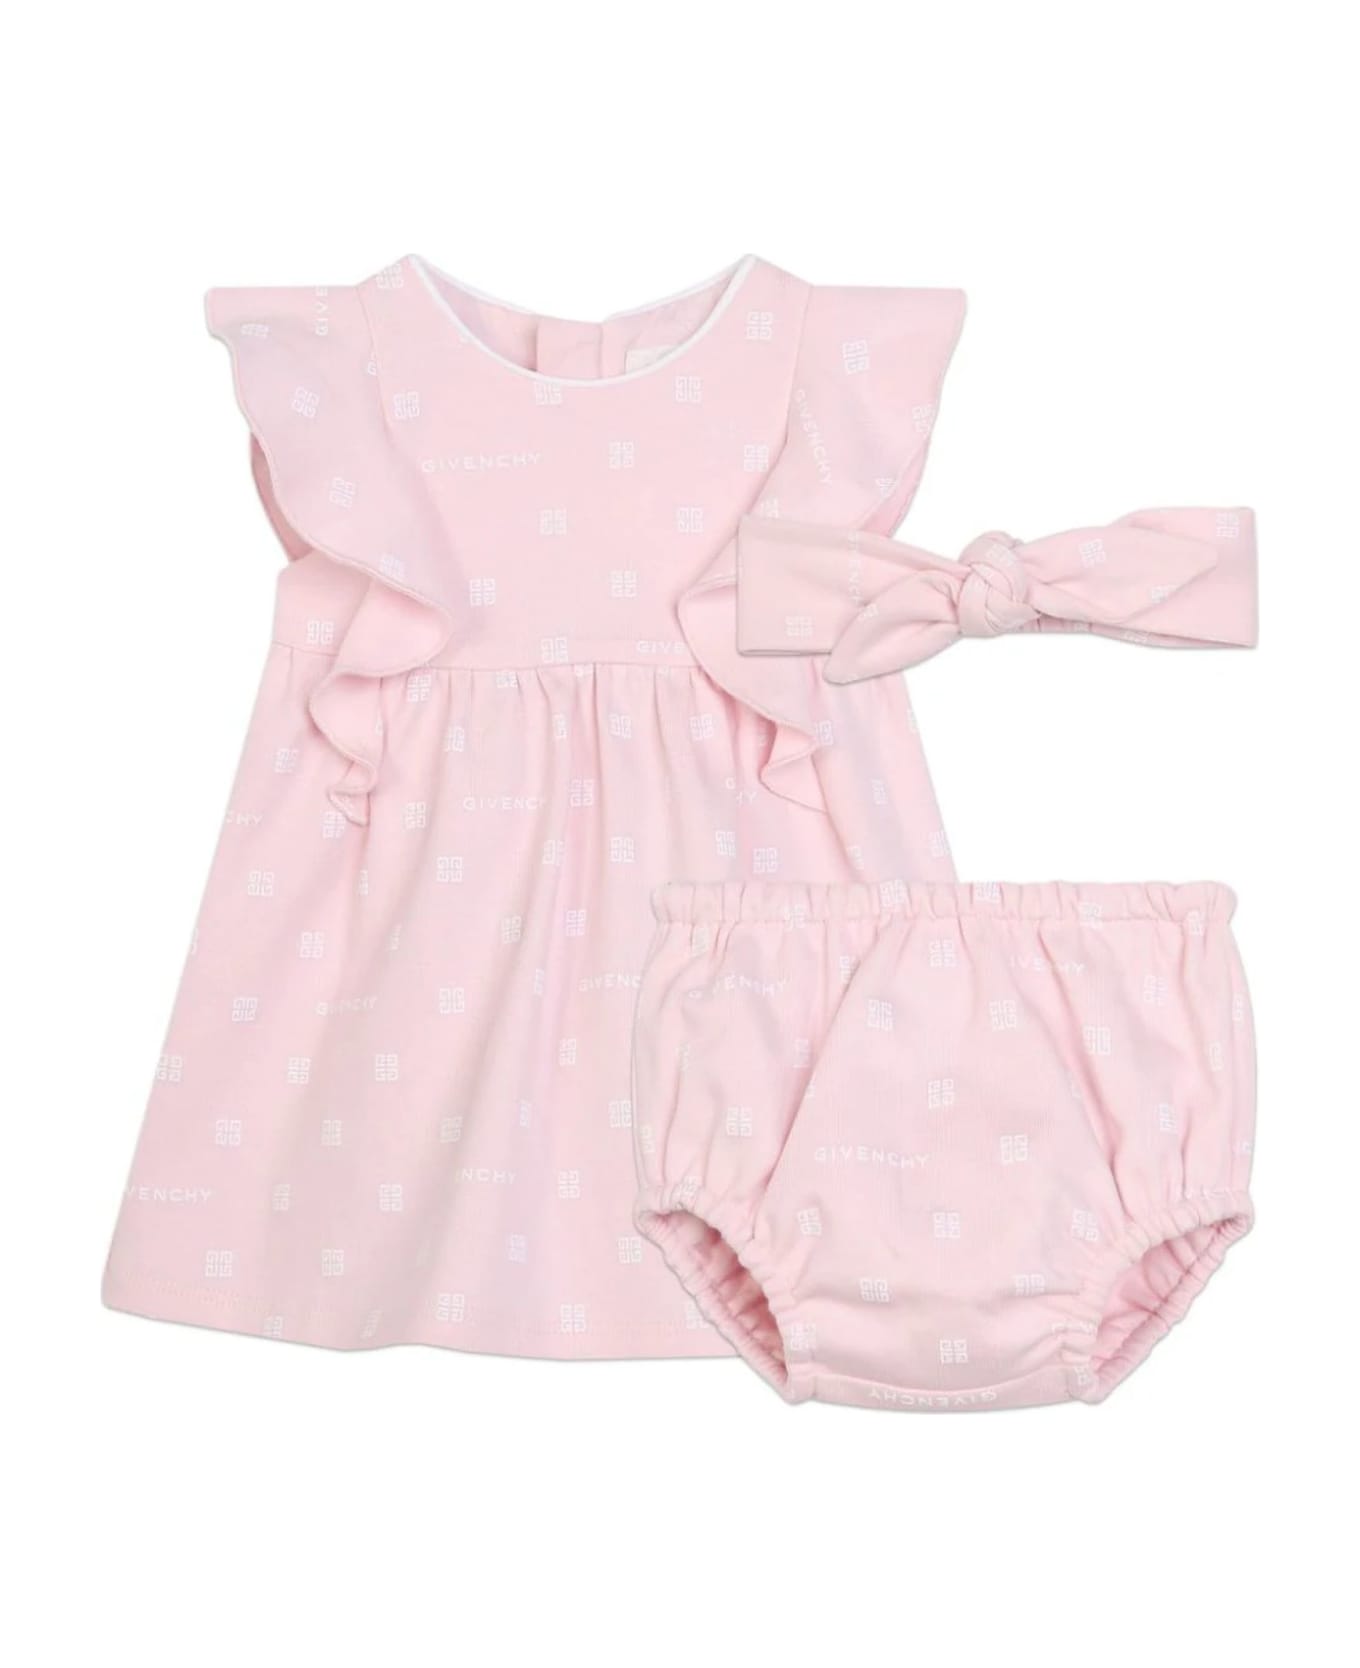 Givenchy Kids Dresses Pink - Pink